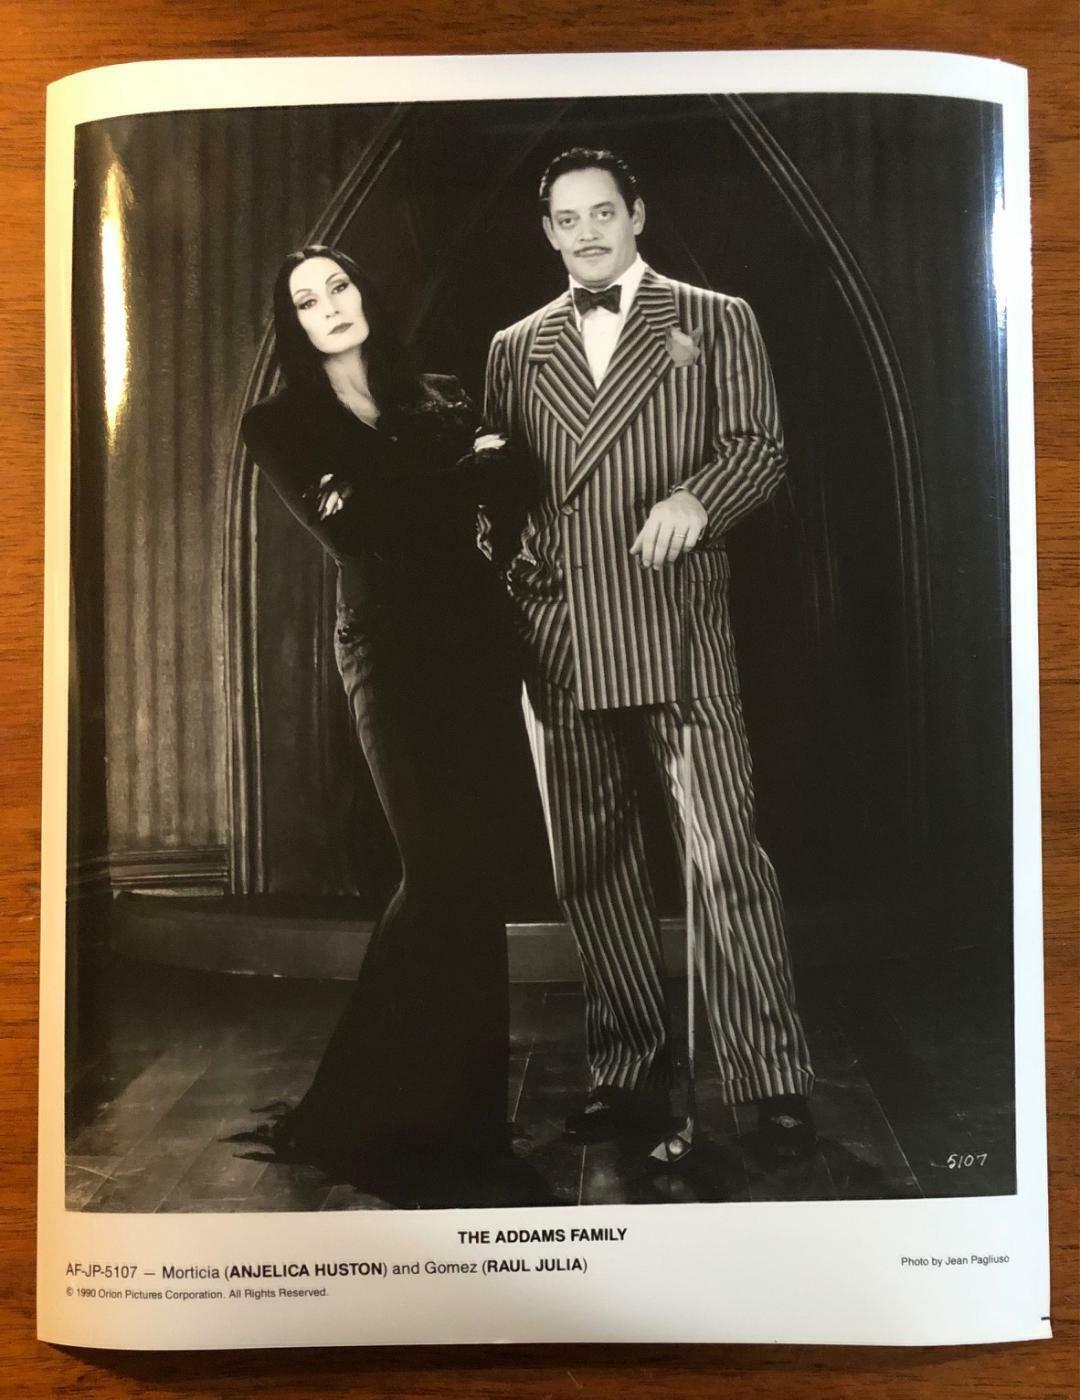 Addams Family 1990 Press Photo Publicity Still Morticia & Gomez #AF-JP-5107